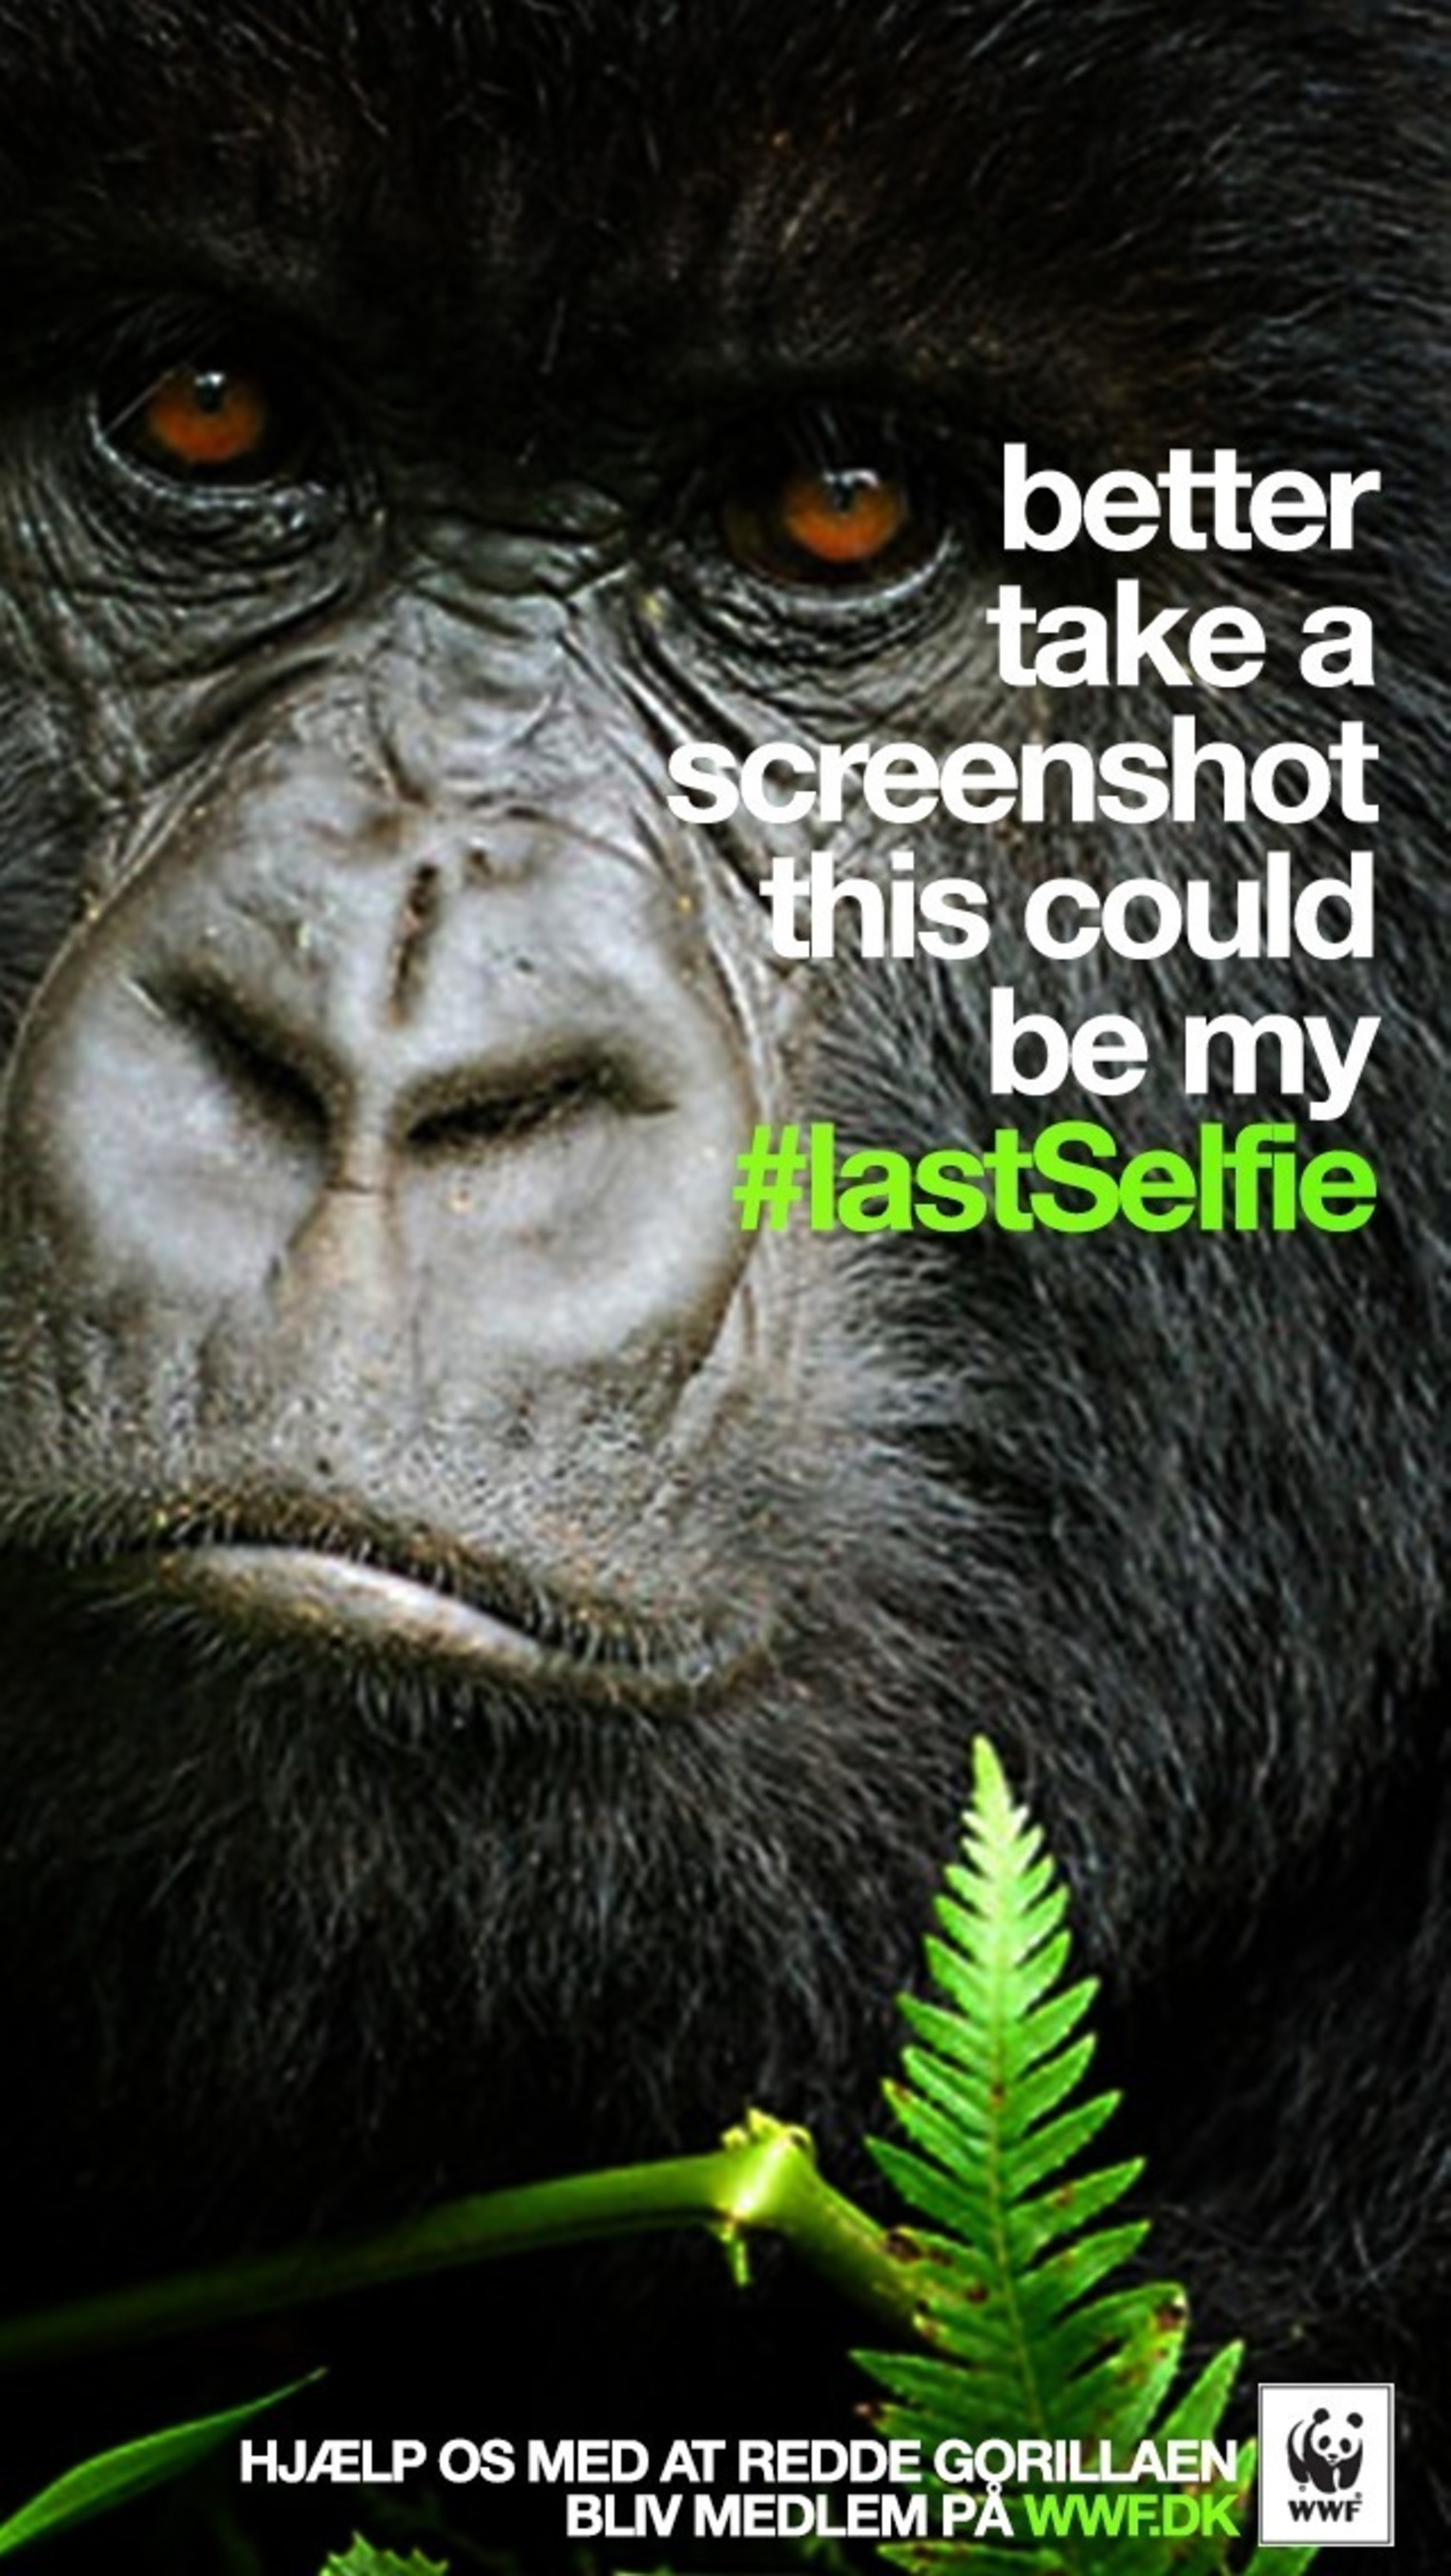 Gorilla #LastSelfie (PRNewsFoto/Grey)